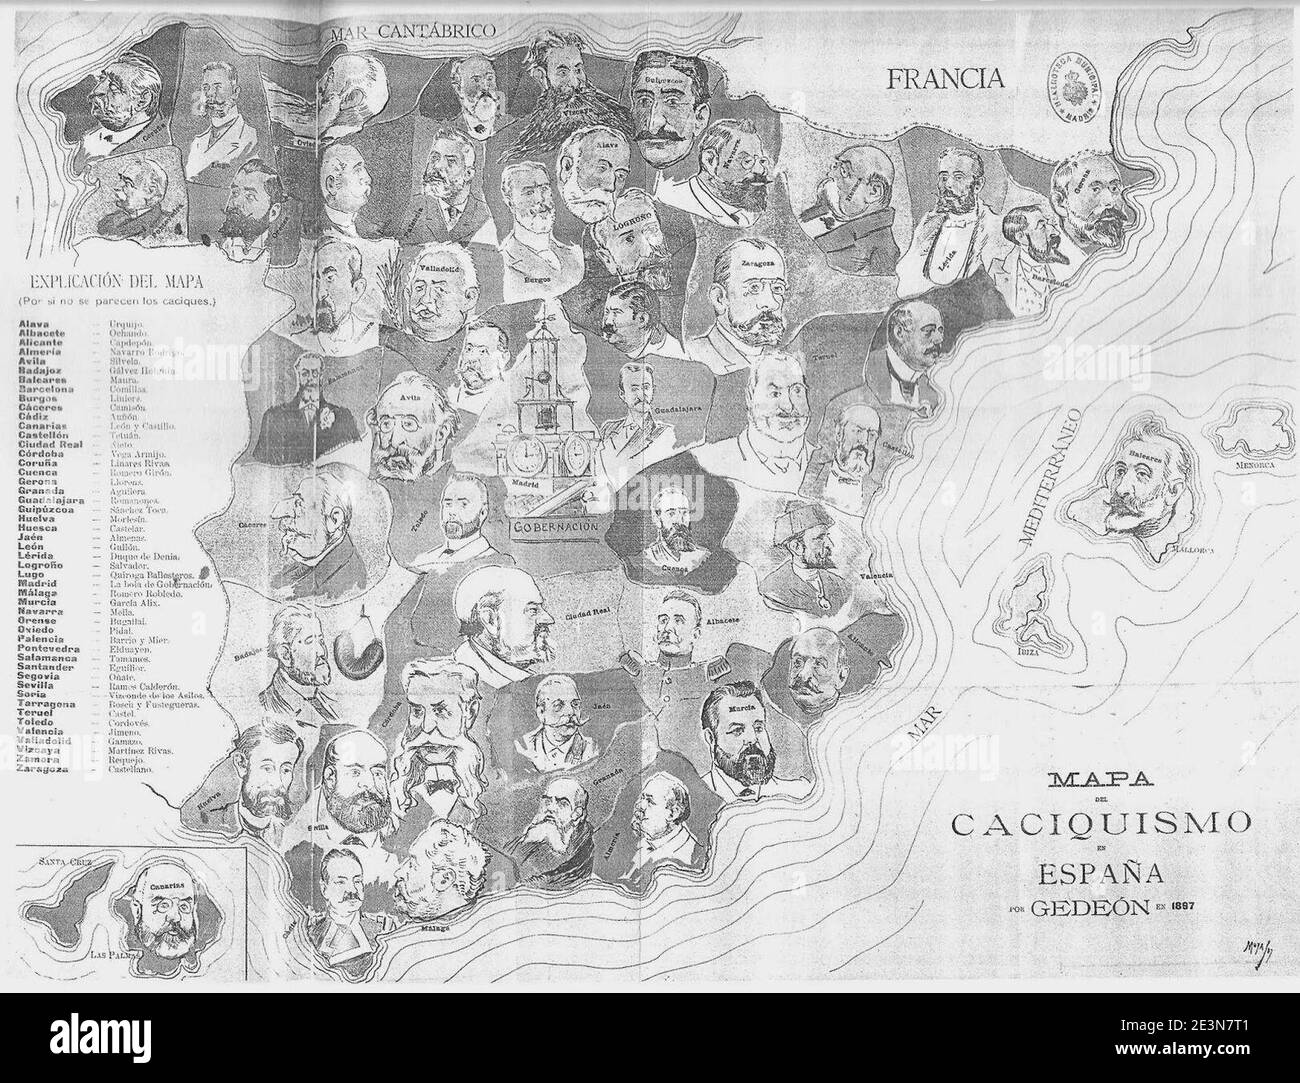 Mapa del caciquismo en España, de Moya. Stock Photo